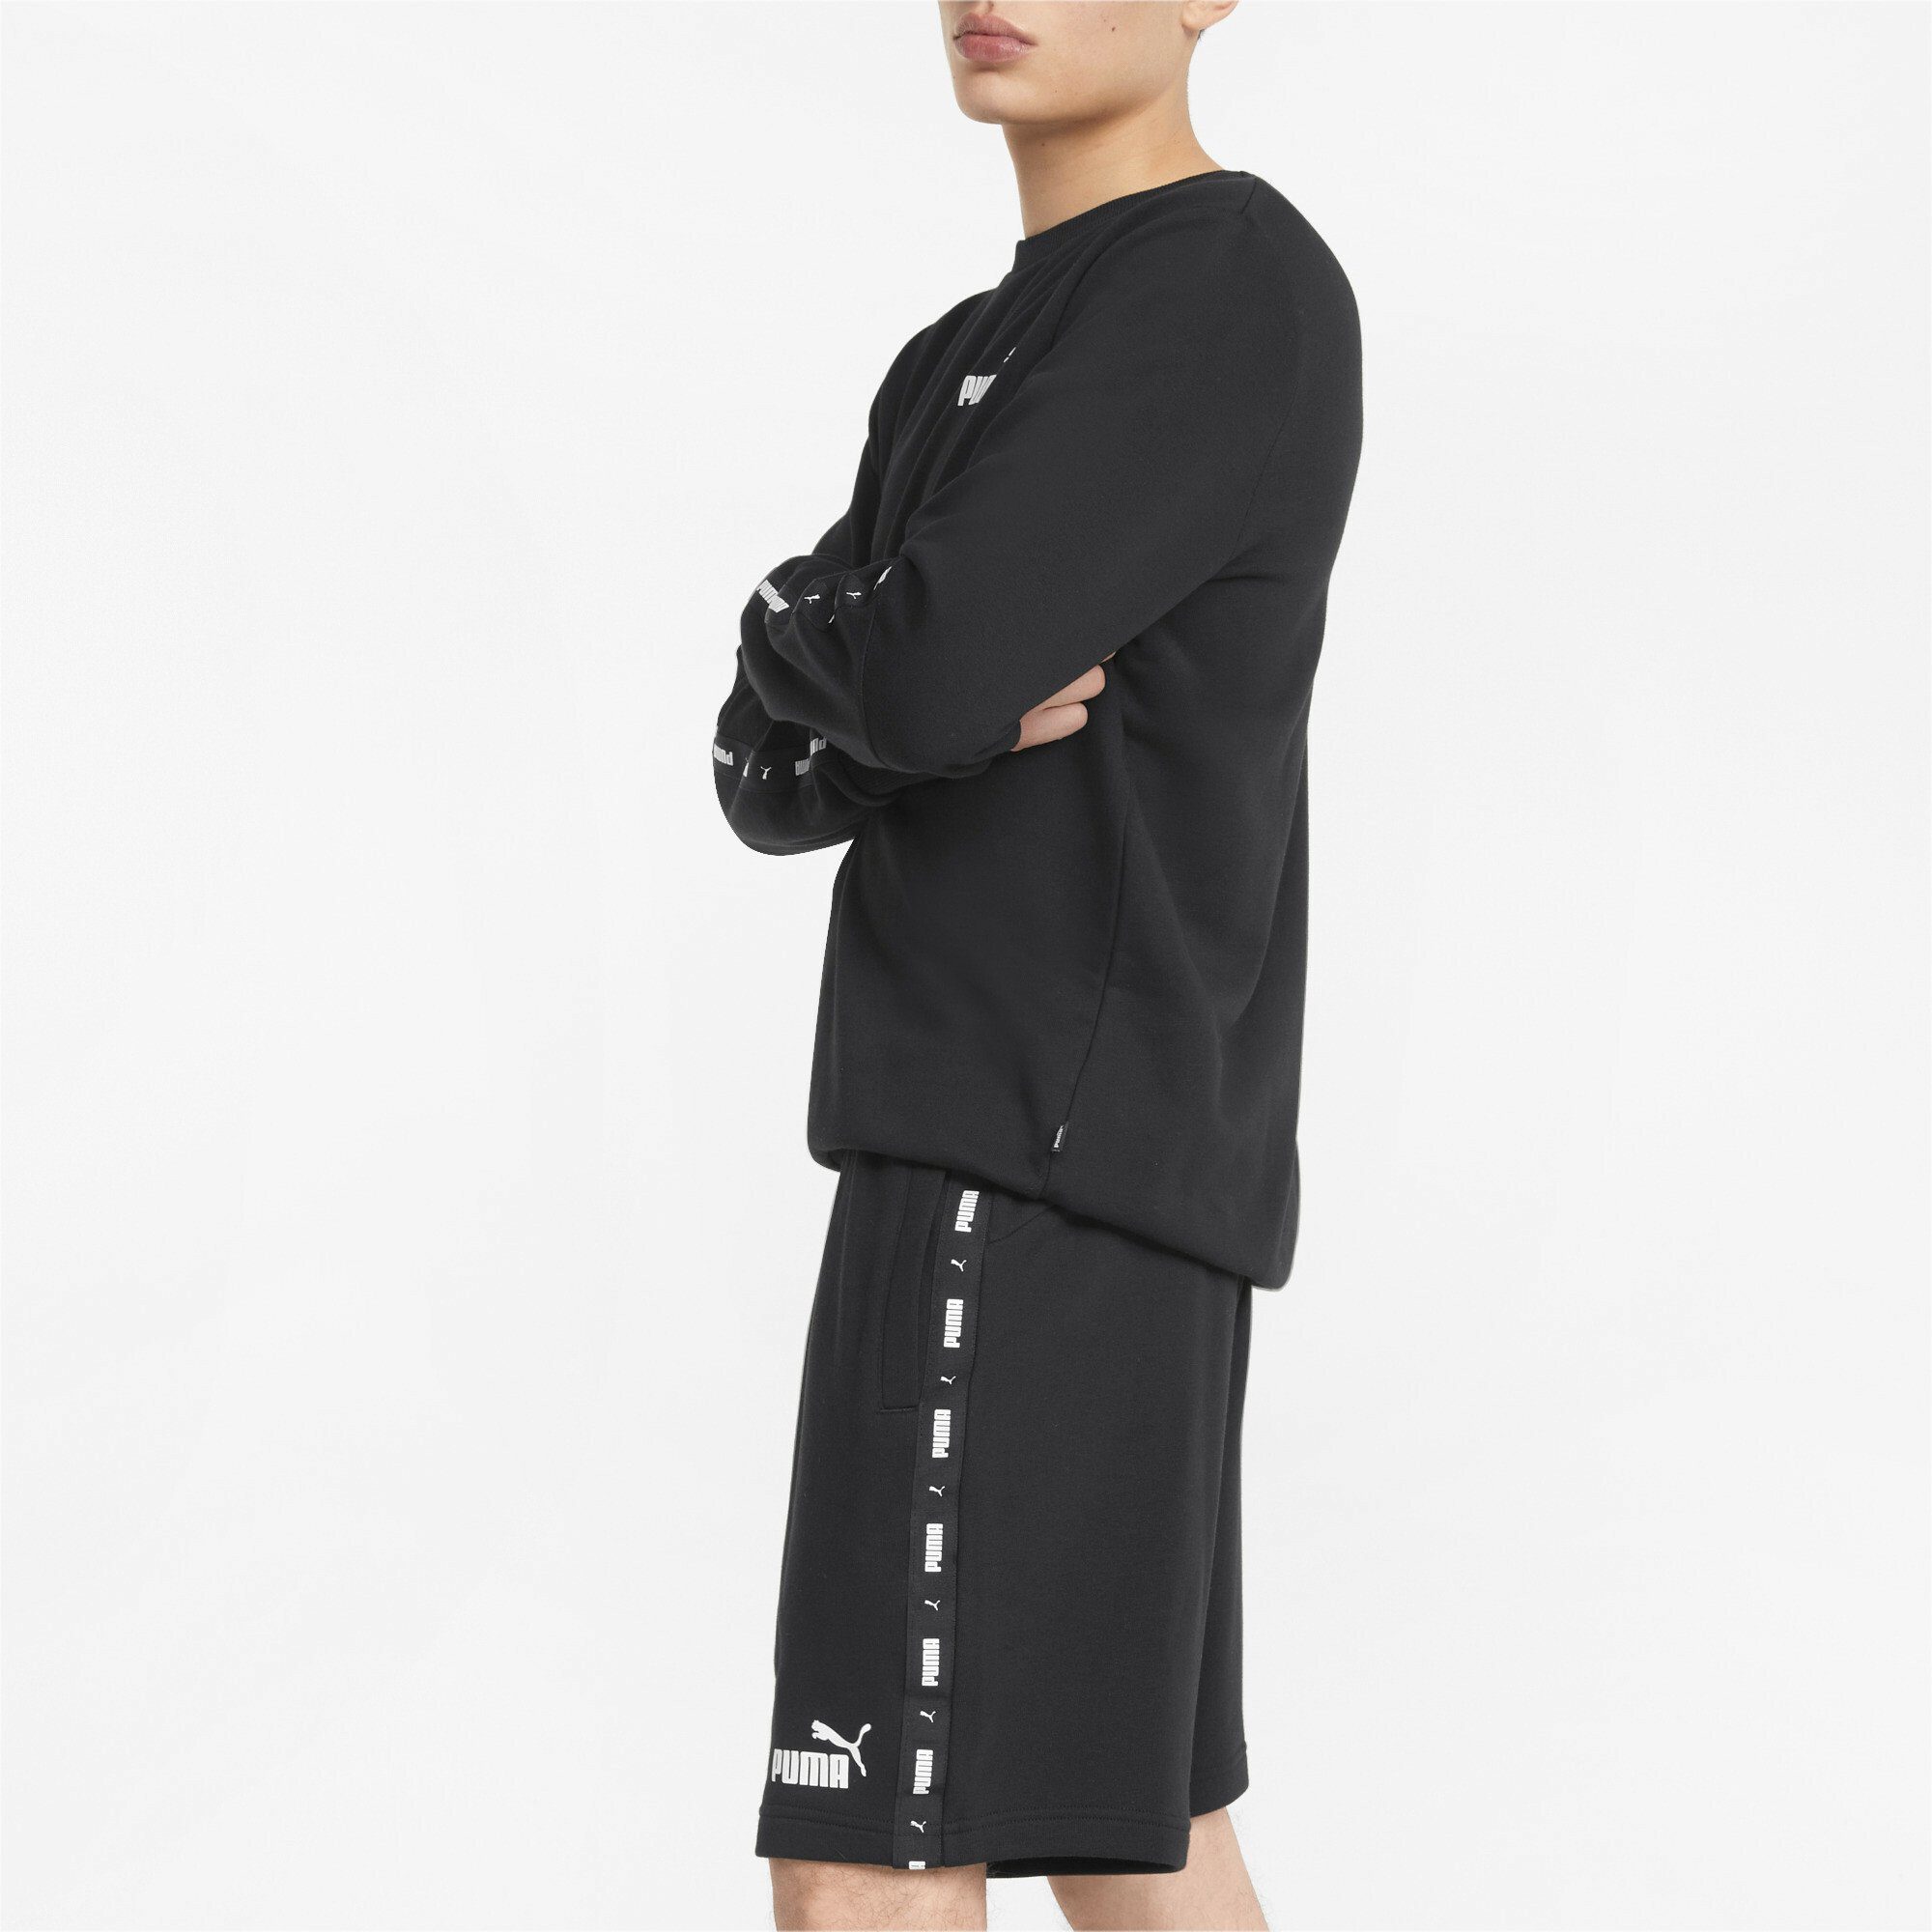 PUMA Sporthose Shorts Black Herren Essentials